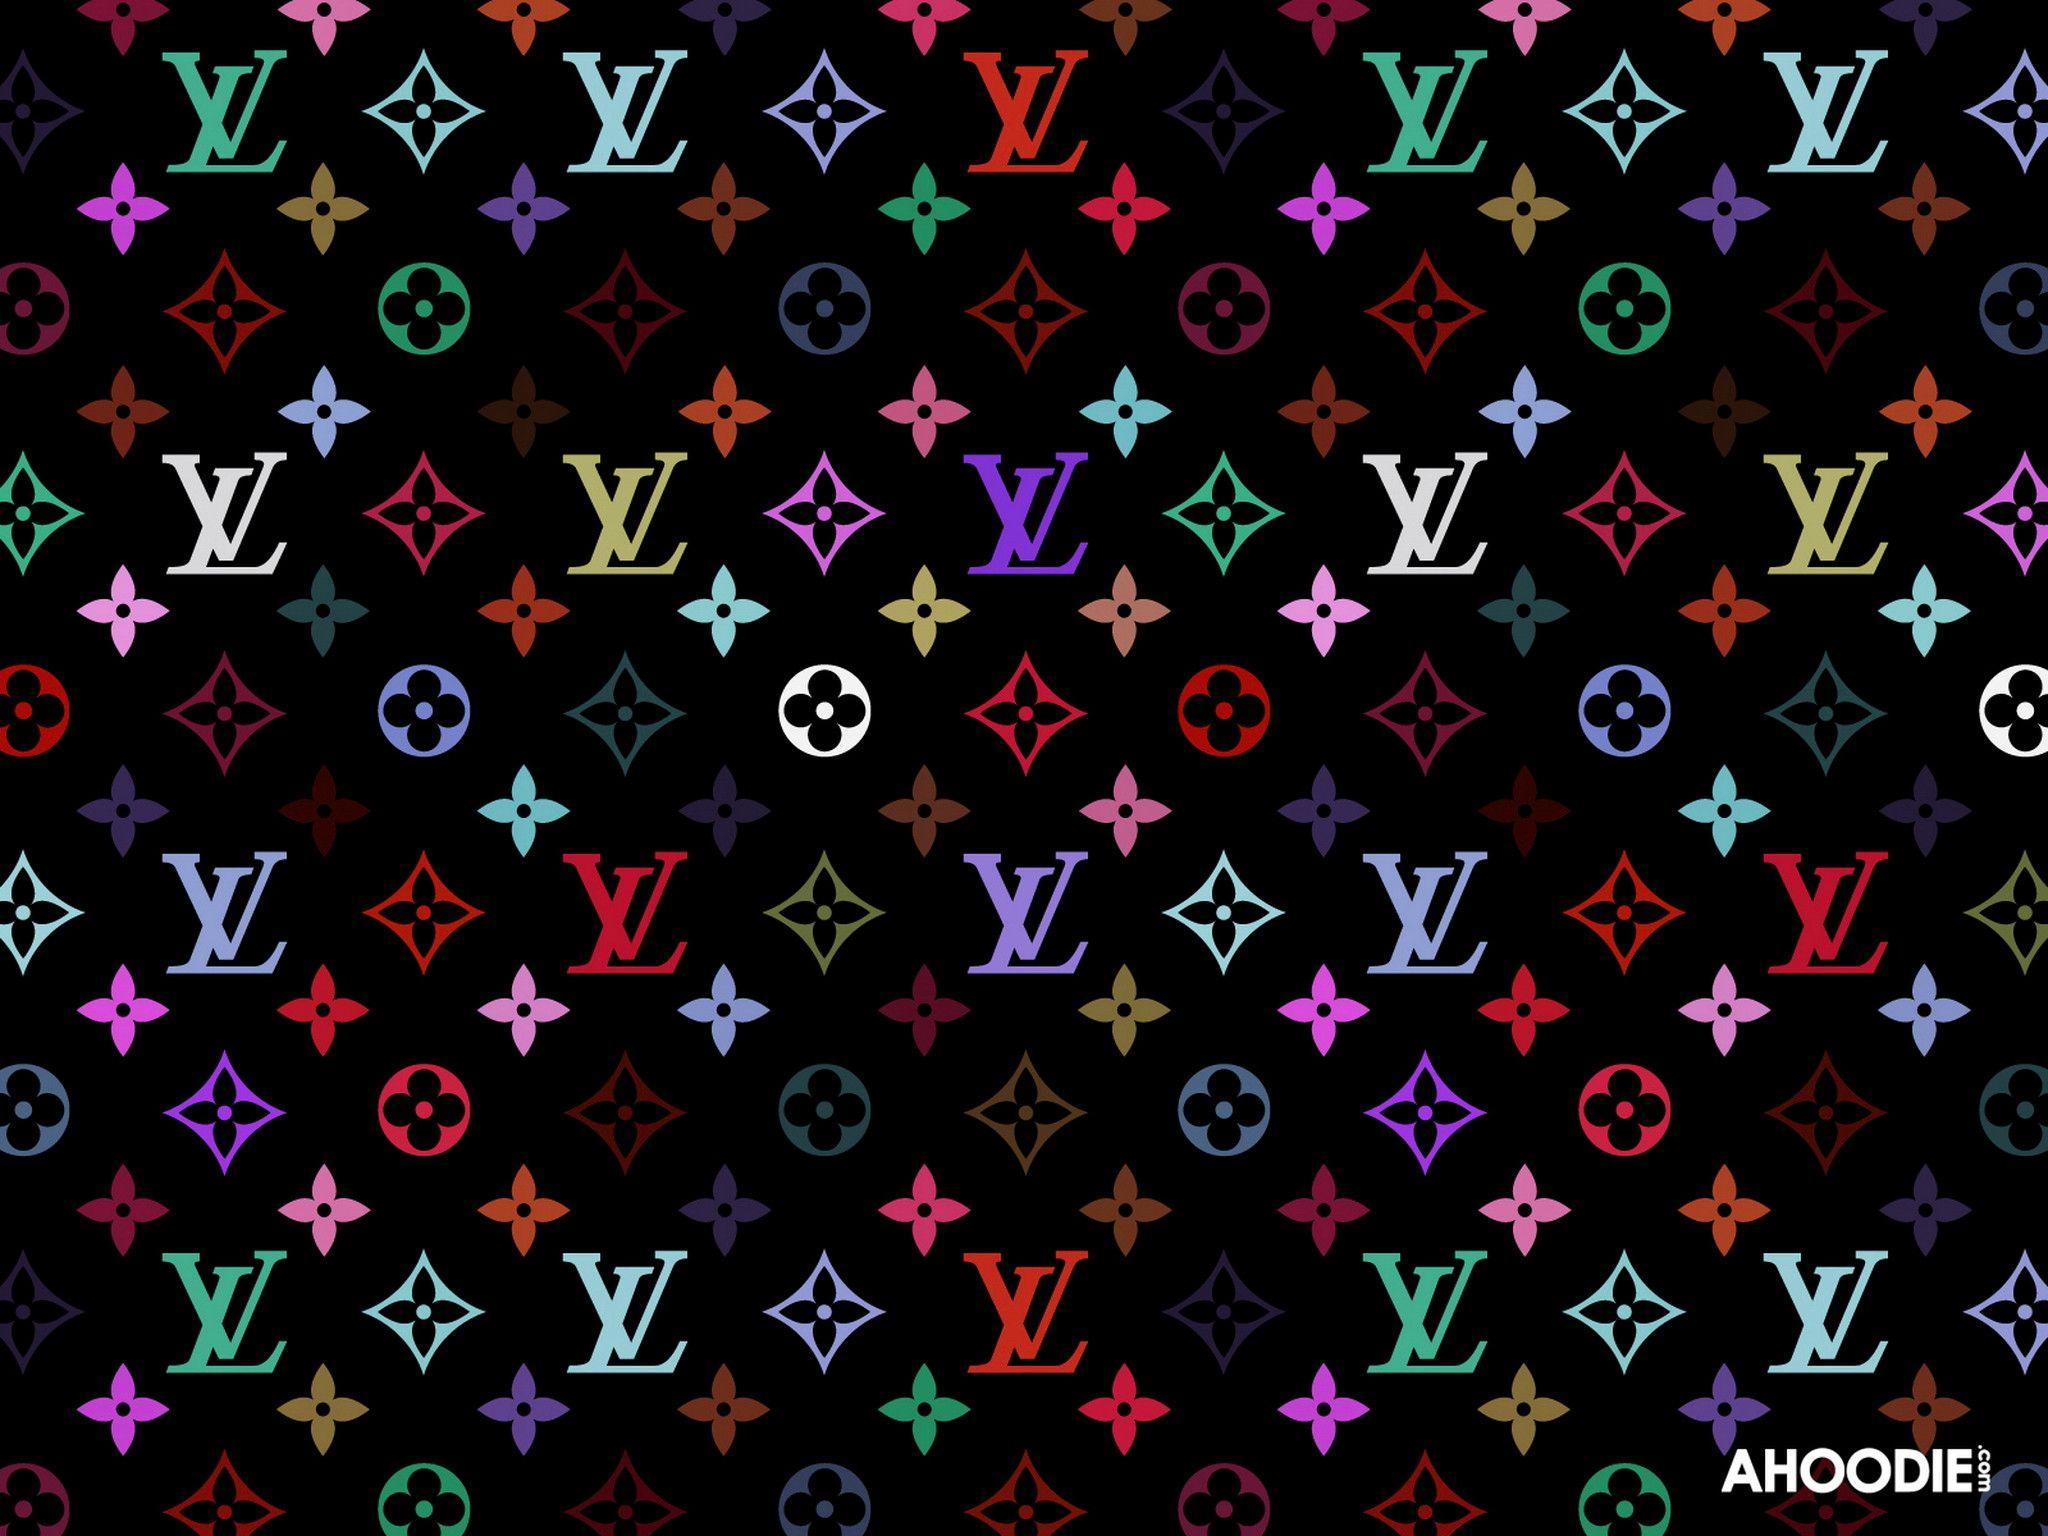 90 Louis Vuitton, Gucci Supreme phone wallpaper ideas  hypebeast wallpaper,  phone wallpaper, iphone wallpaper